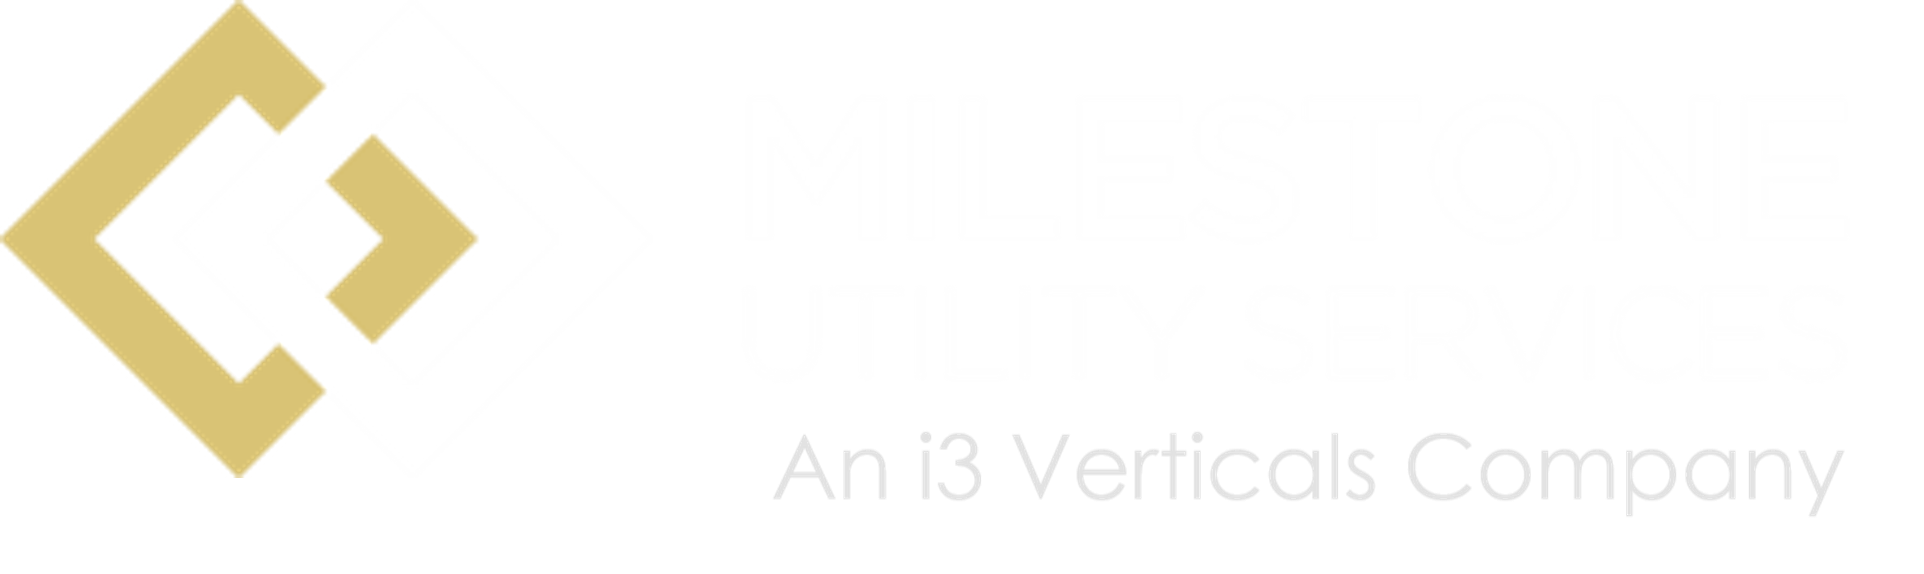 Milestone Utility Services